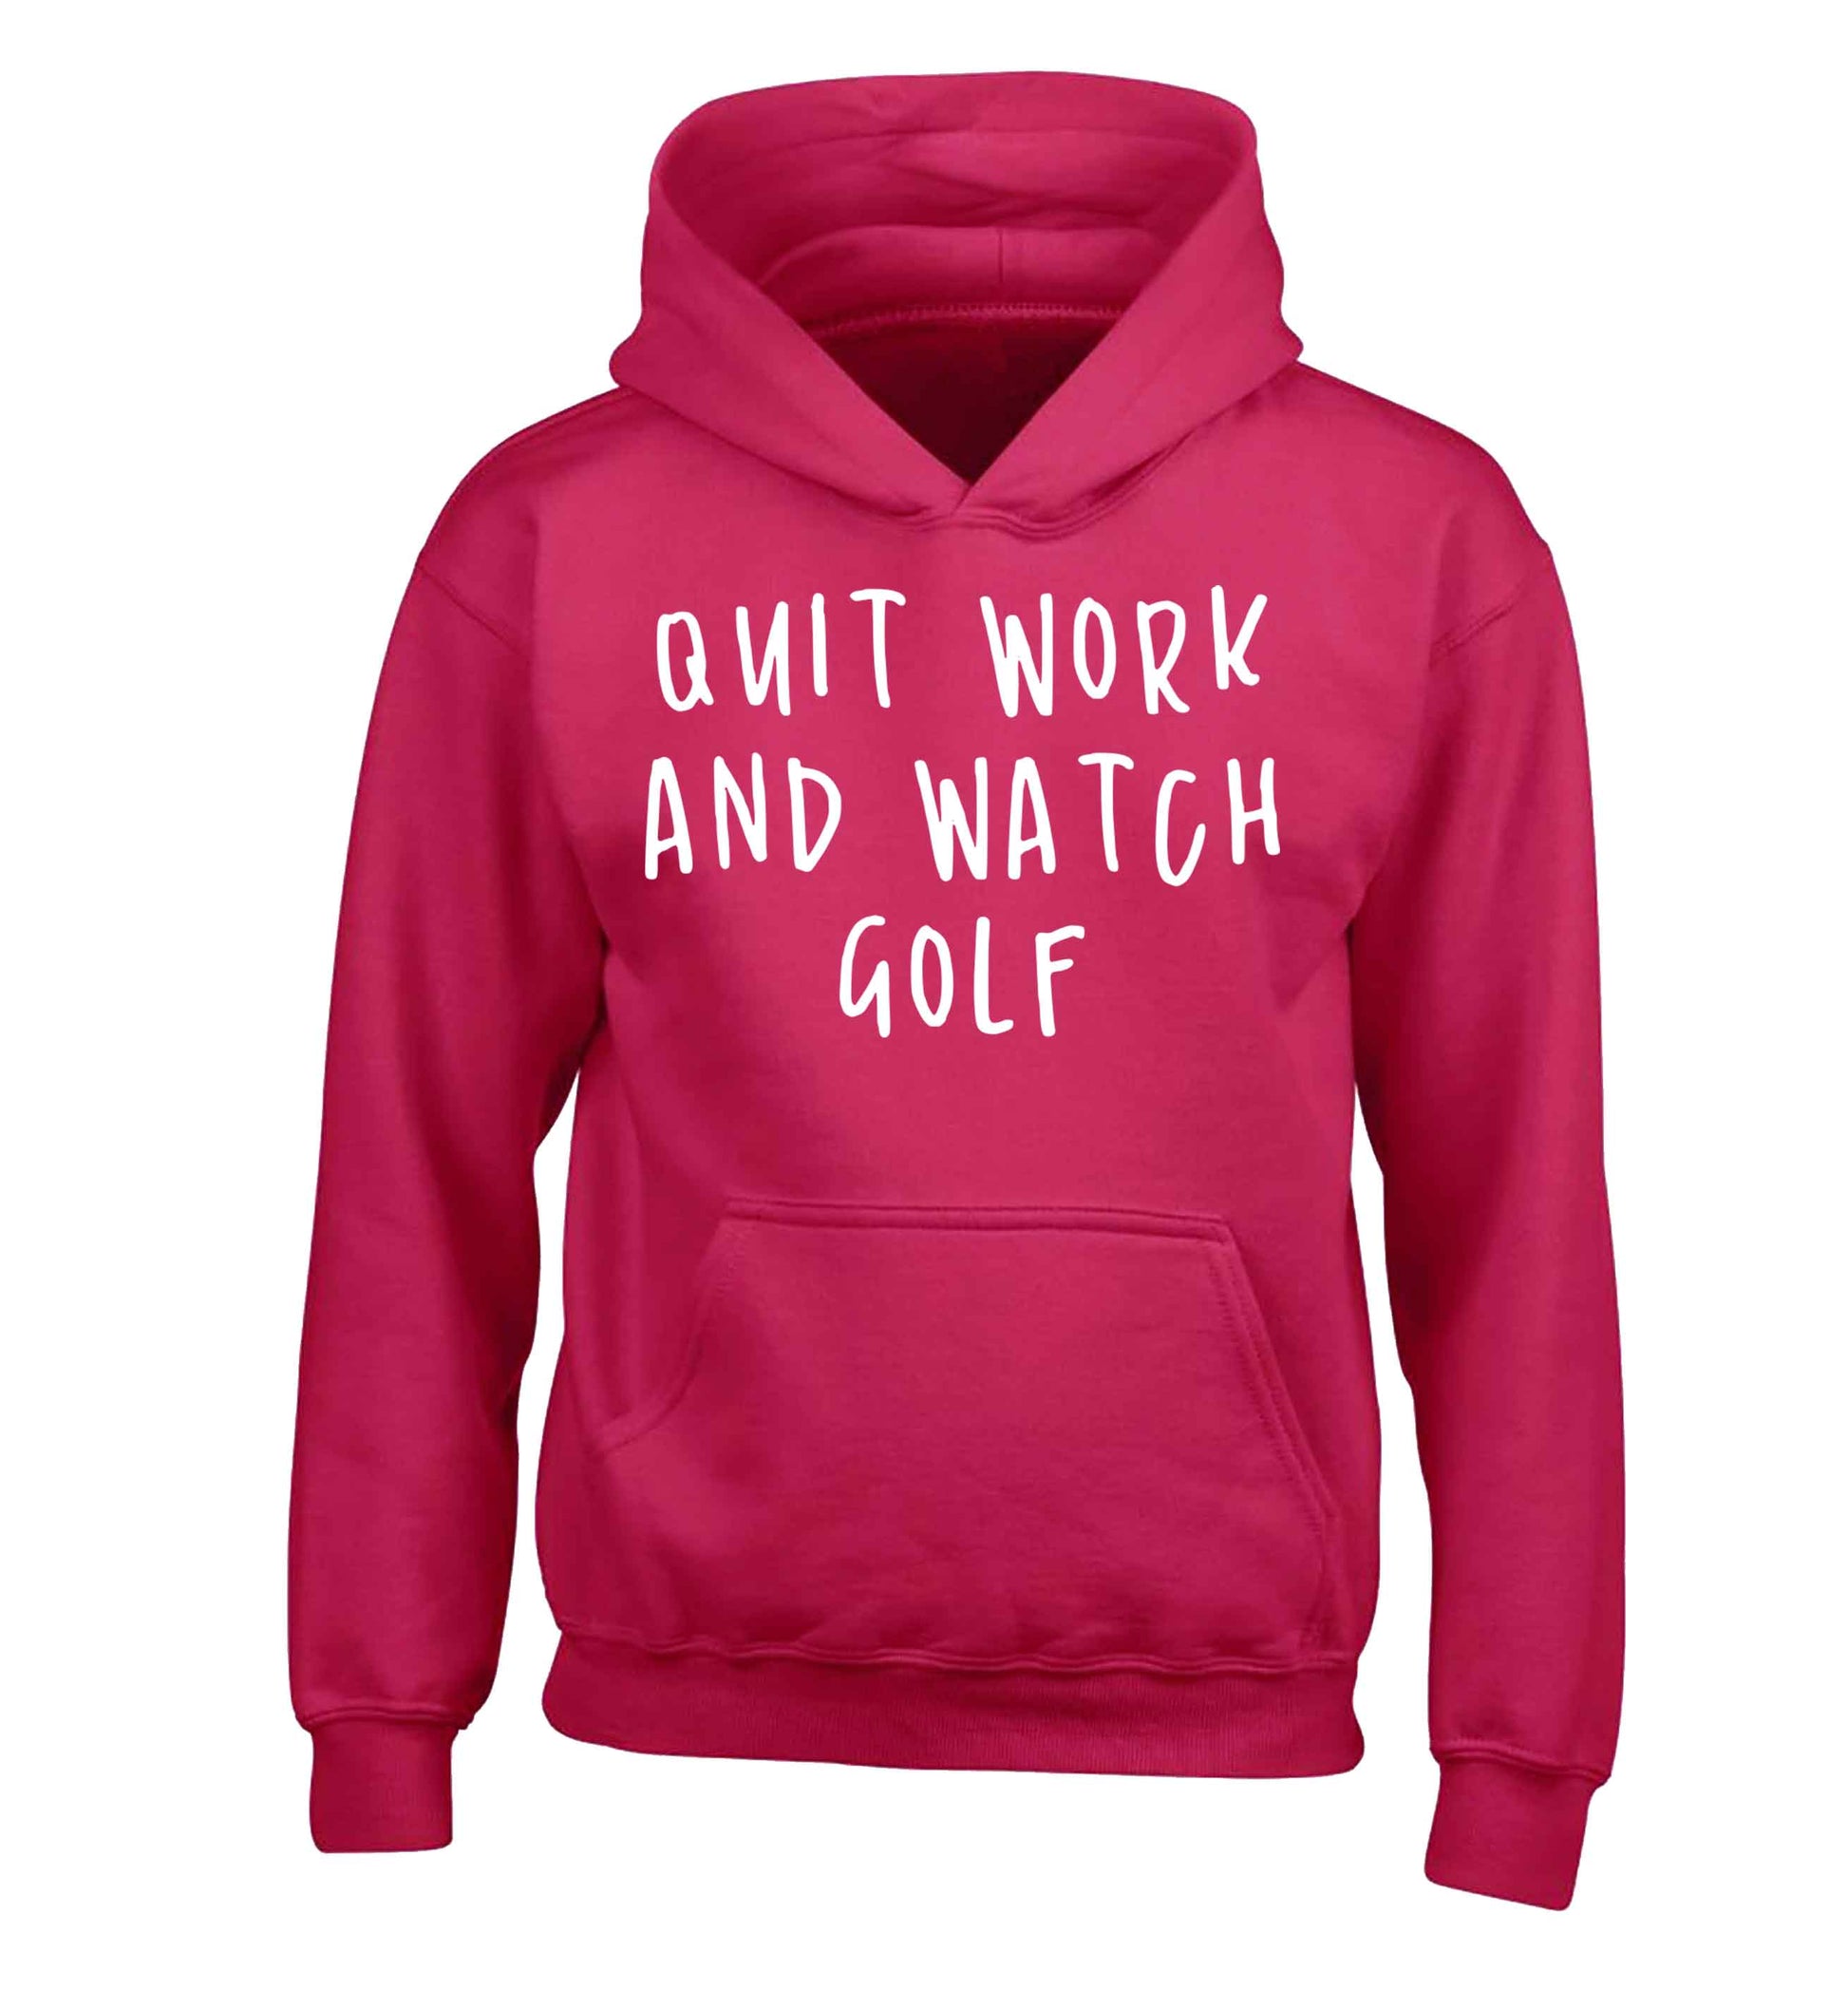 Quit work and watch golf children's pink hoodie 12-13 Years